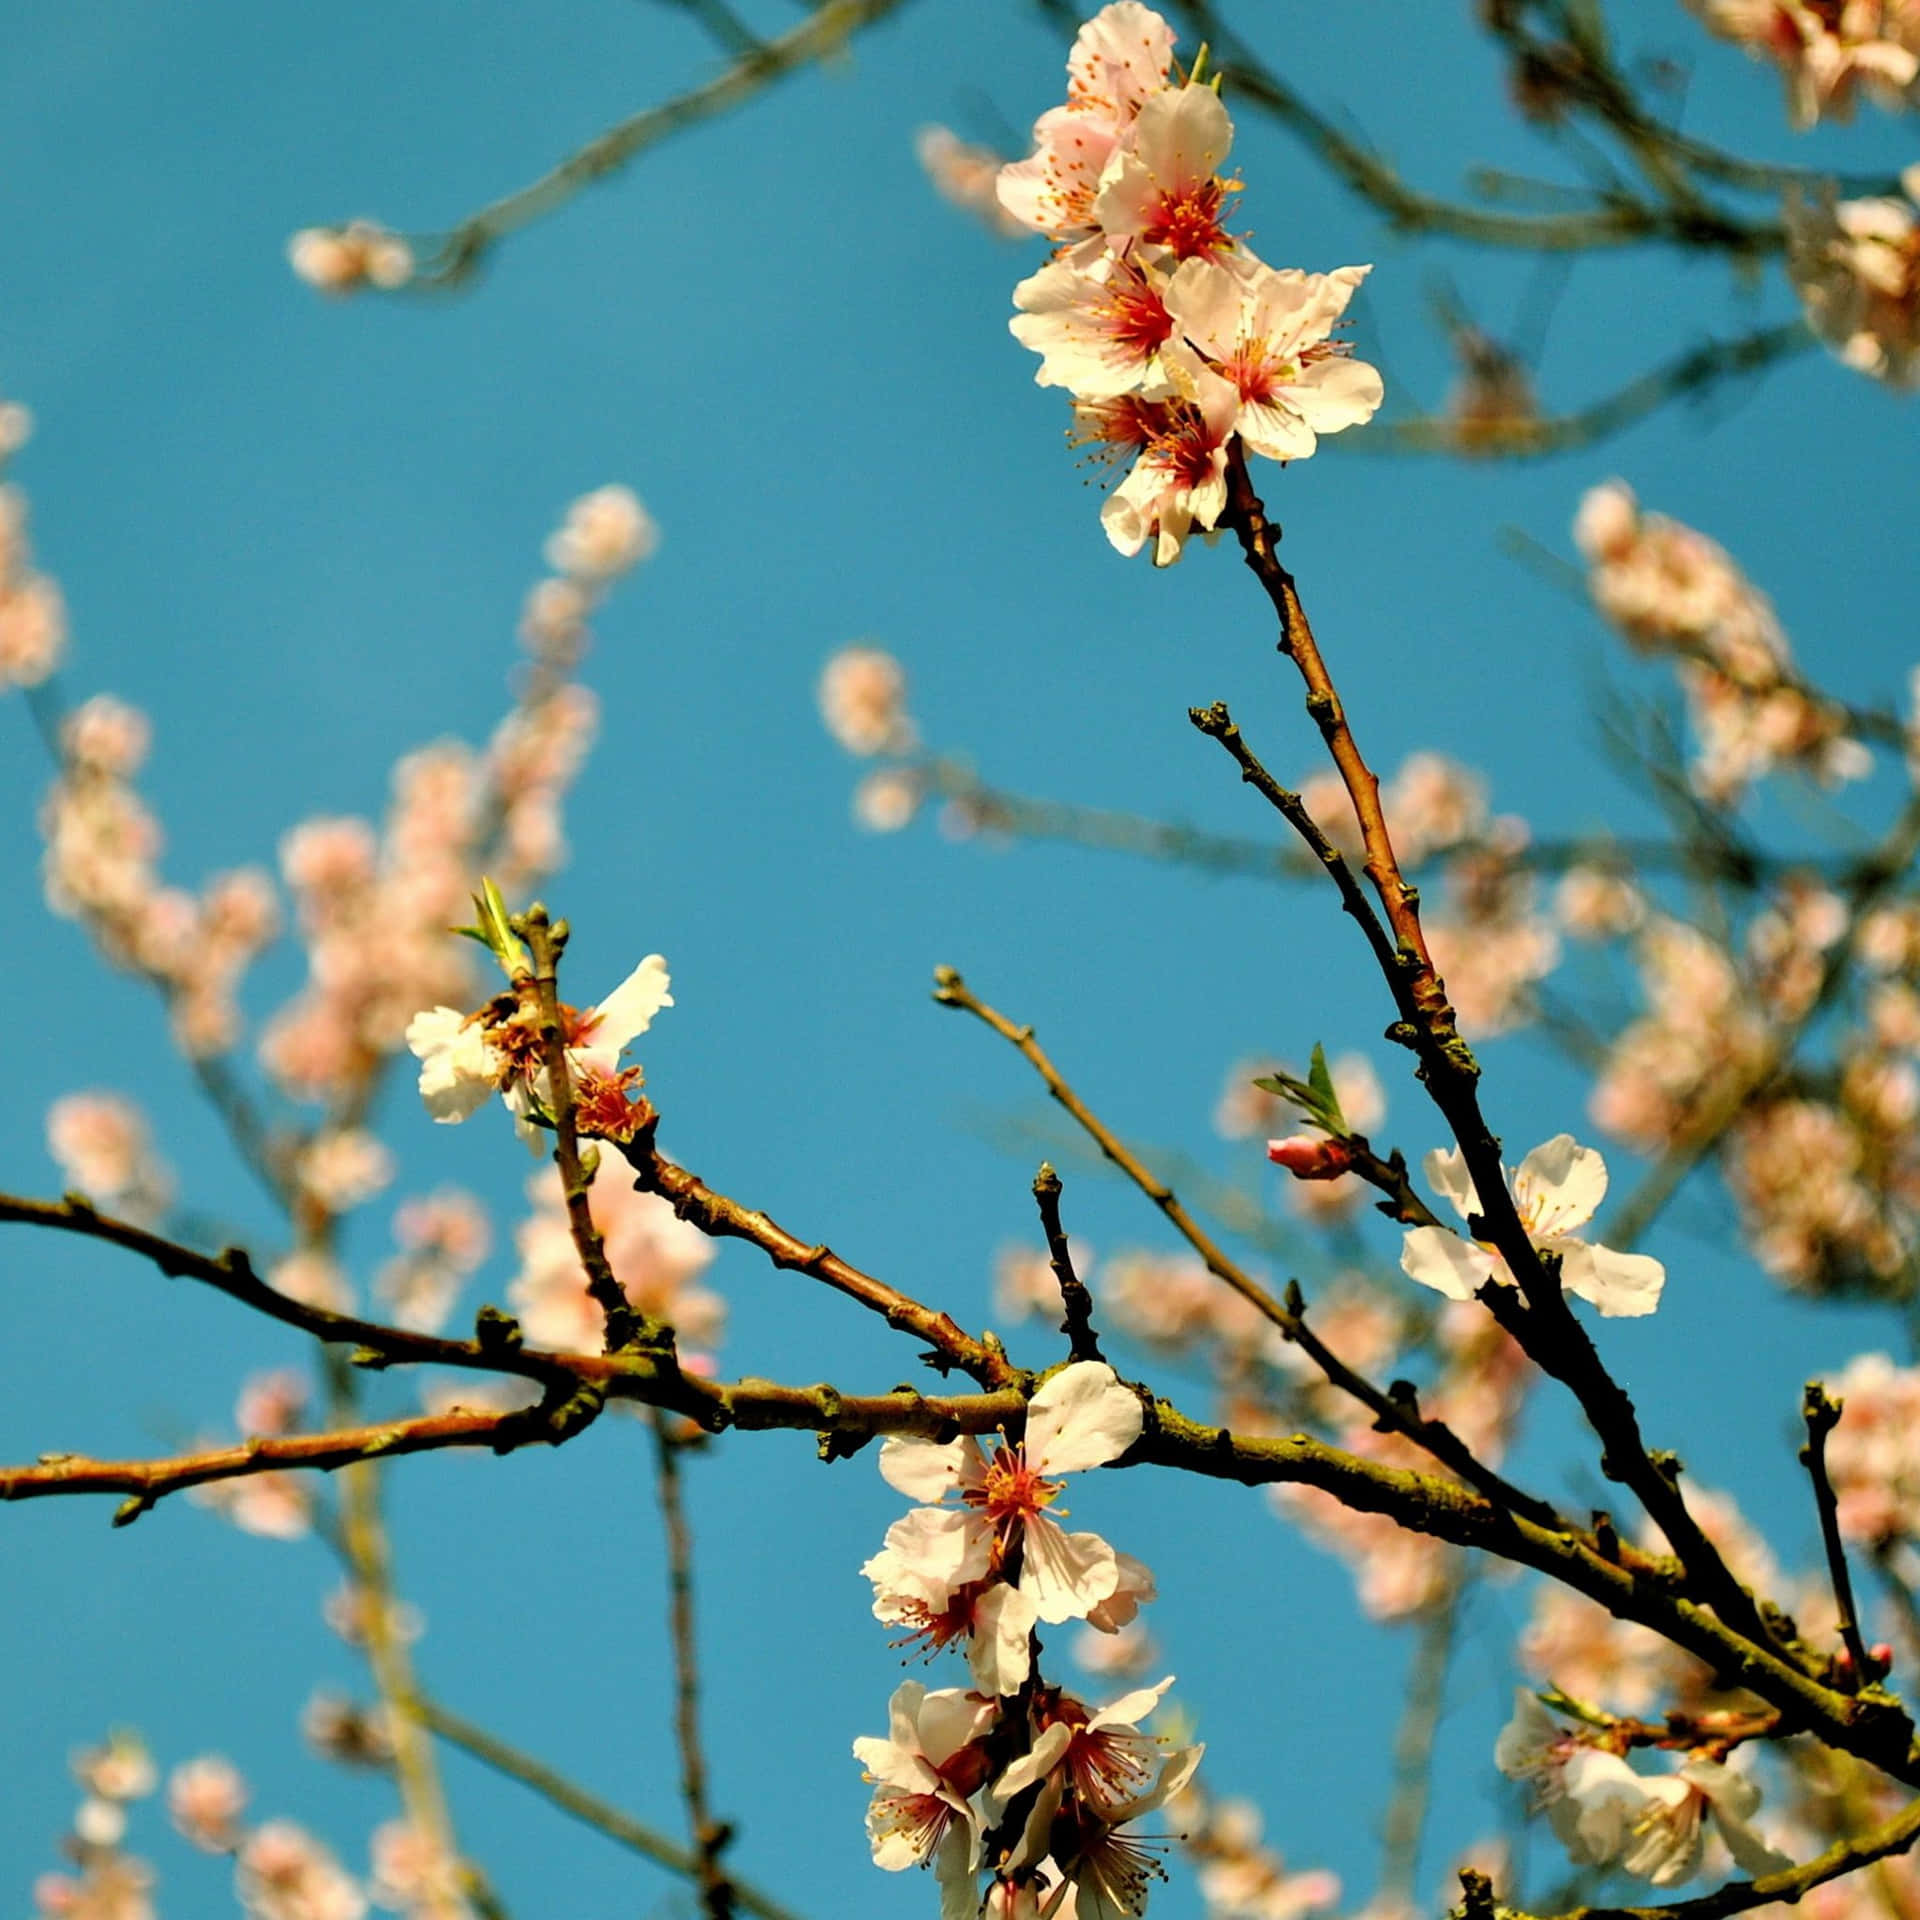 Caption: "enchanting Cherry Blossom Digital Art On Aesthetic Ipad Background"